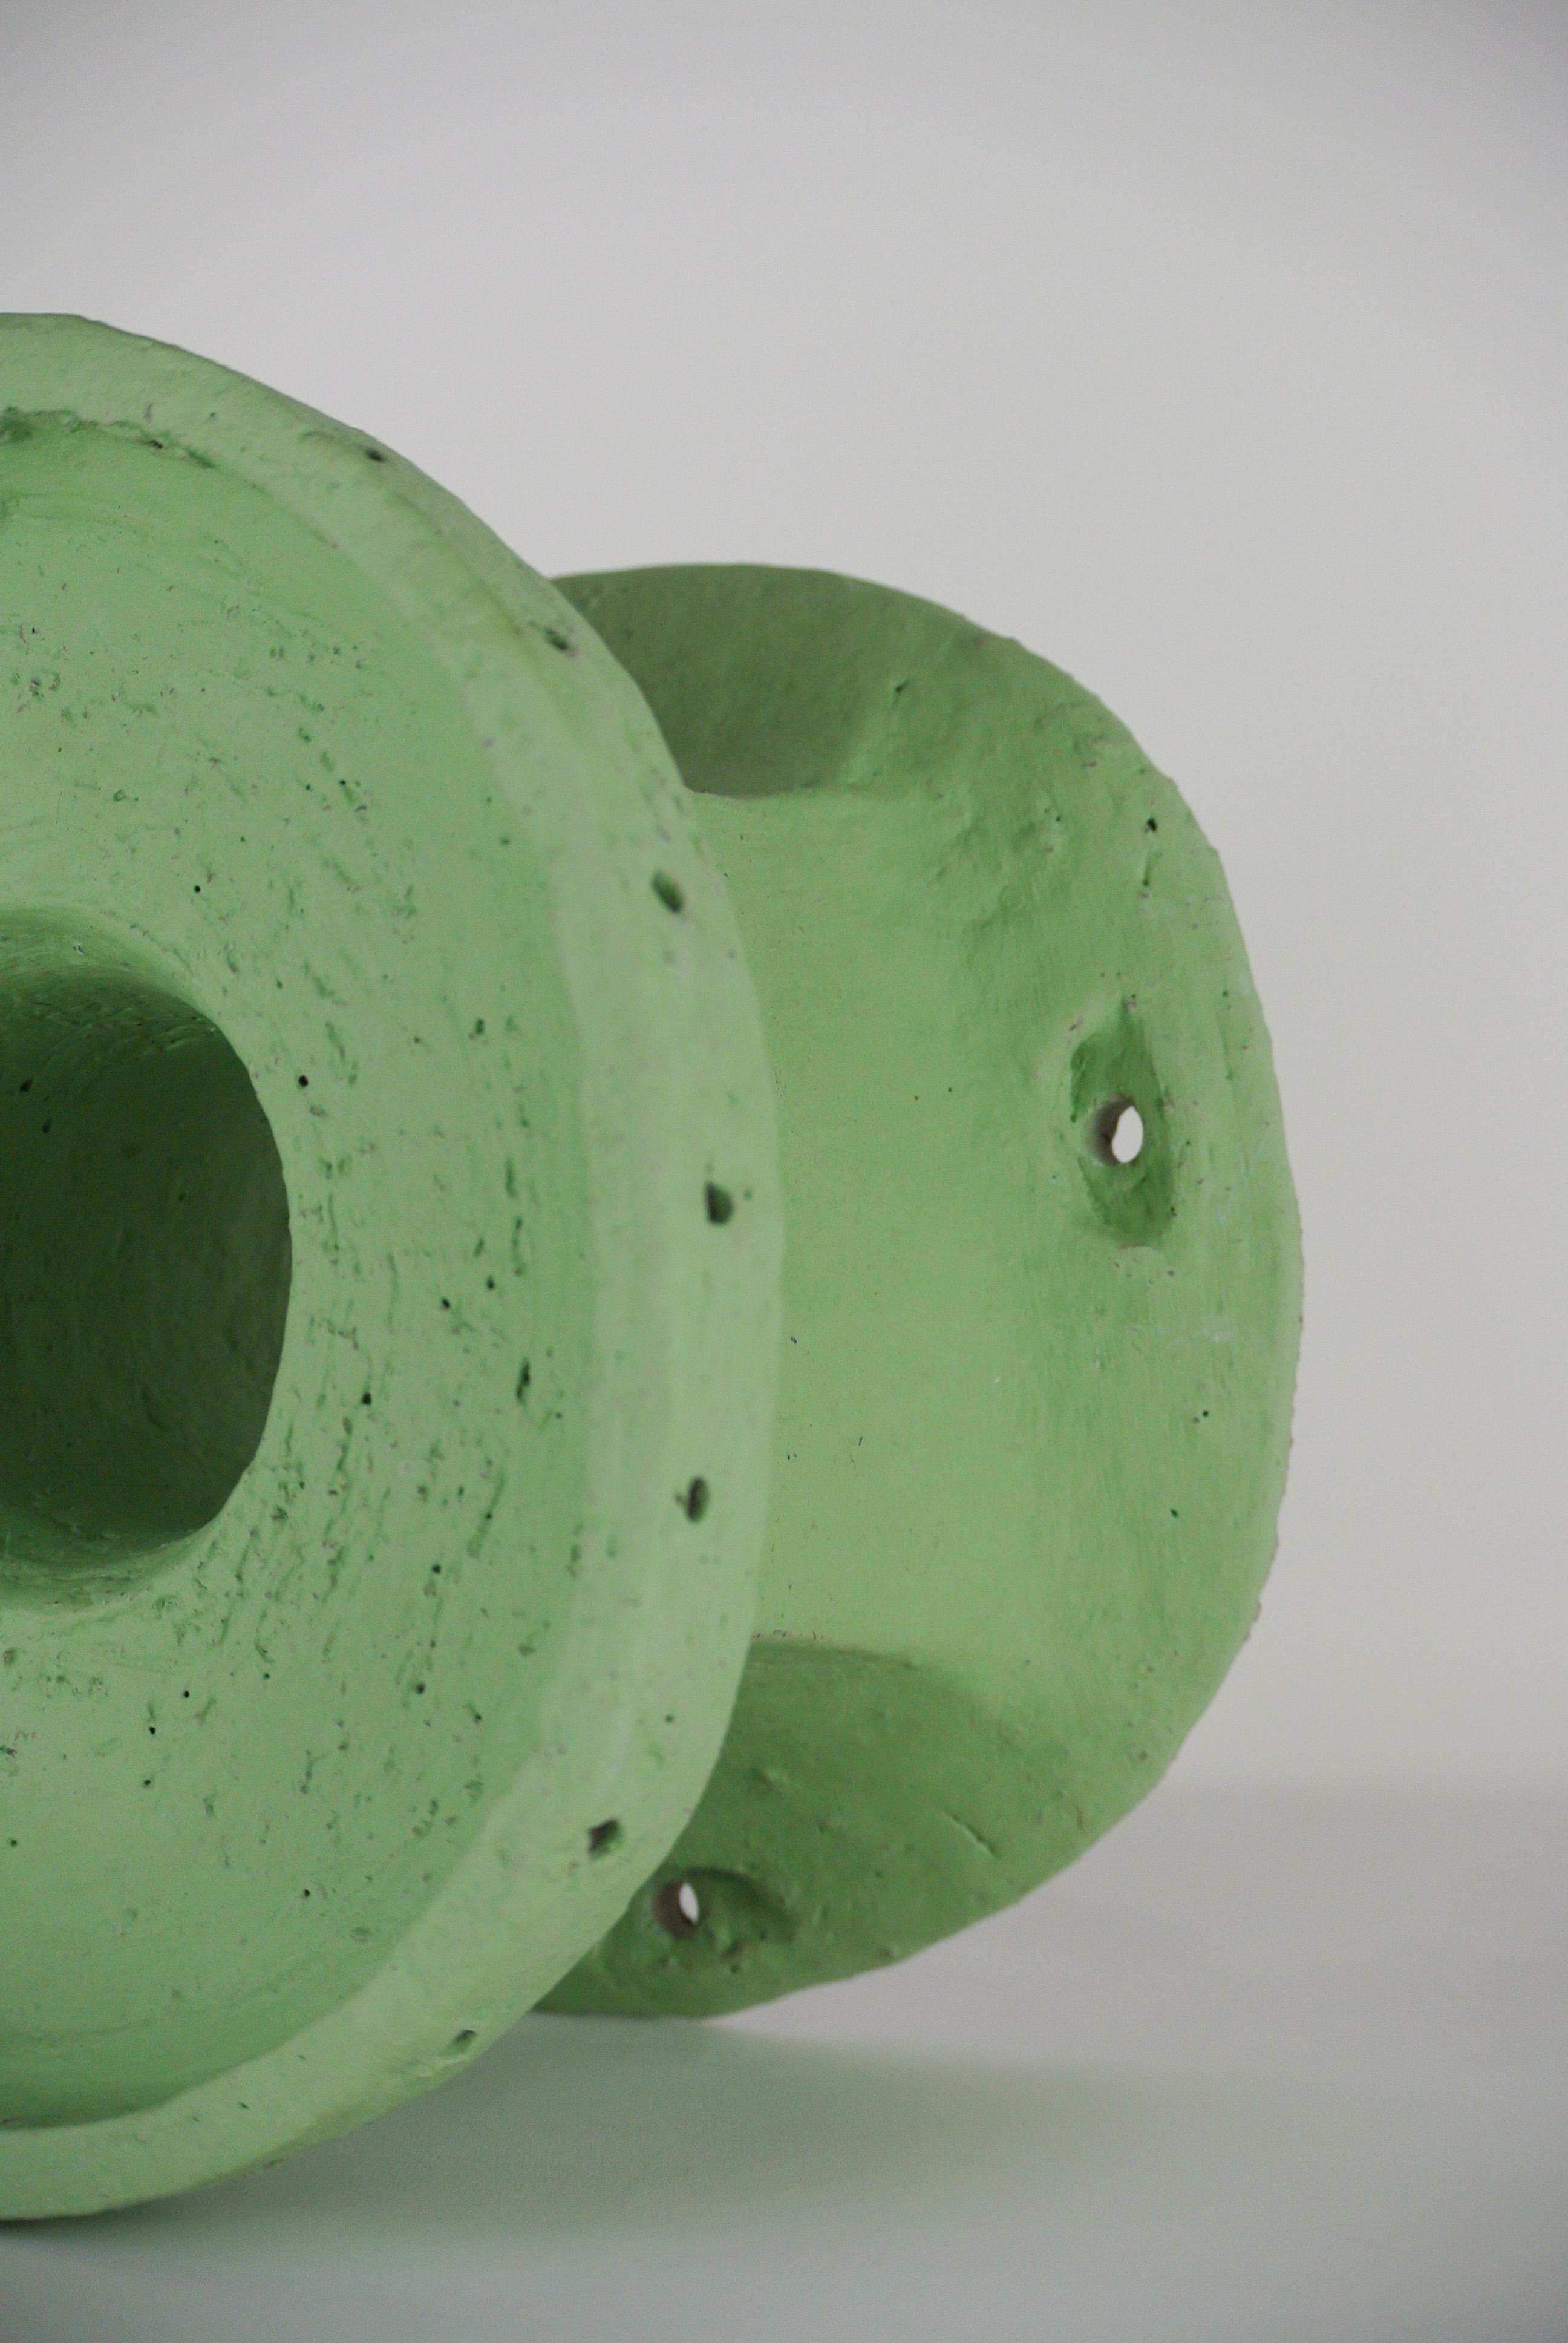 German Contemporary Hand-Build Ceramic Chandelier Grey Stoneware with Green Engobe